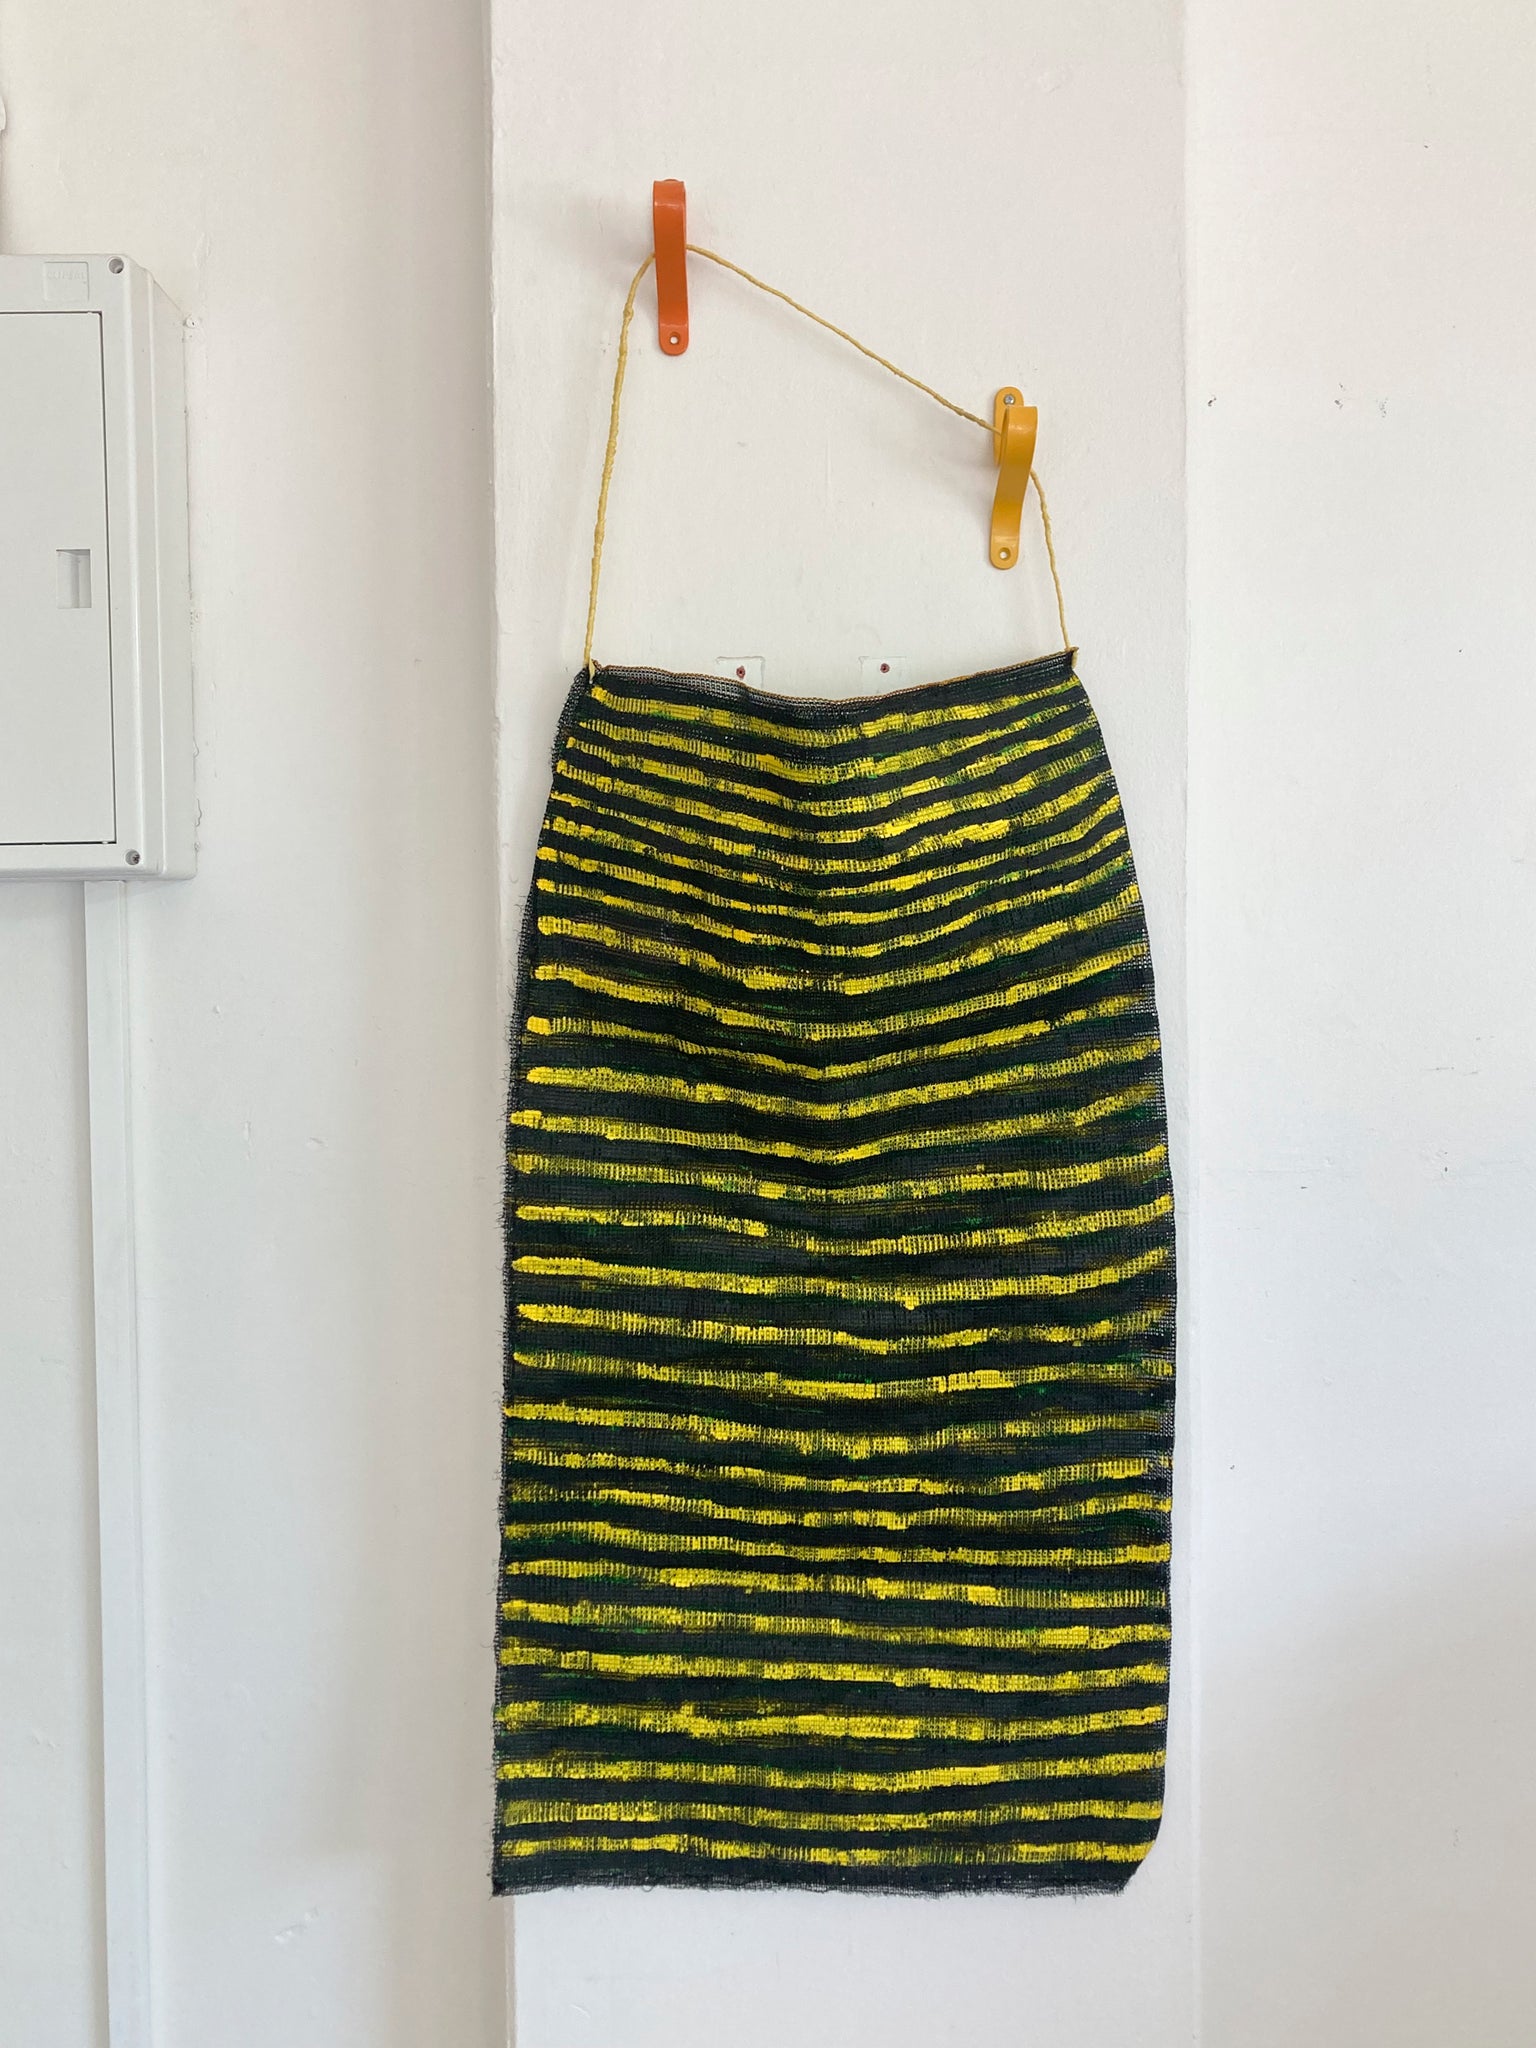 Yir (Dilly Bag) - Painted shade cloth bag